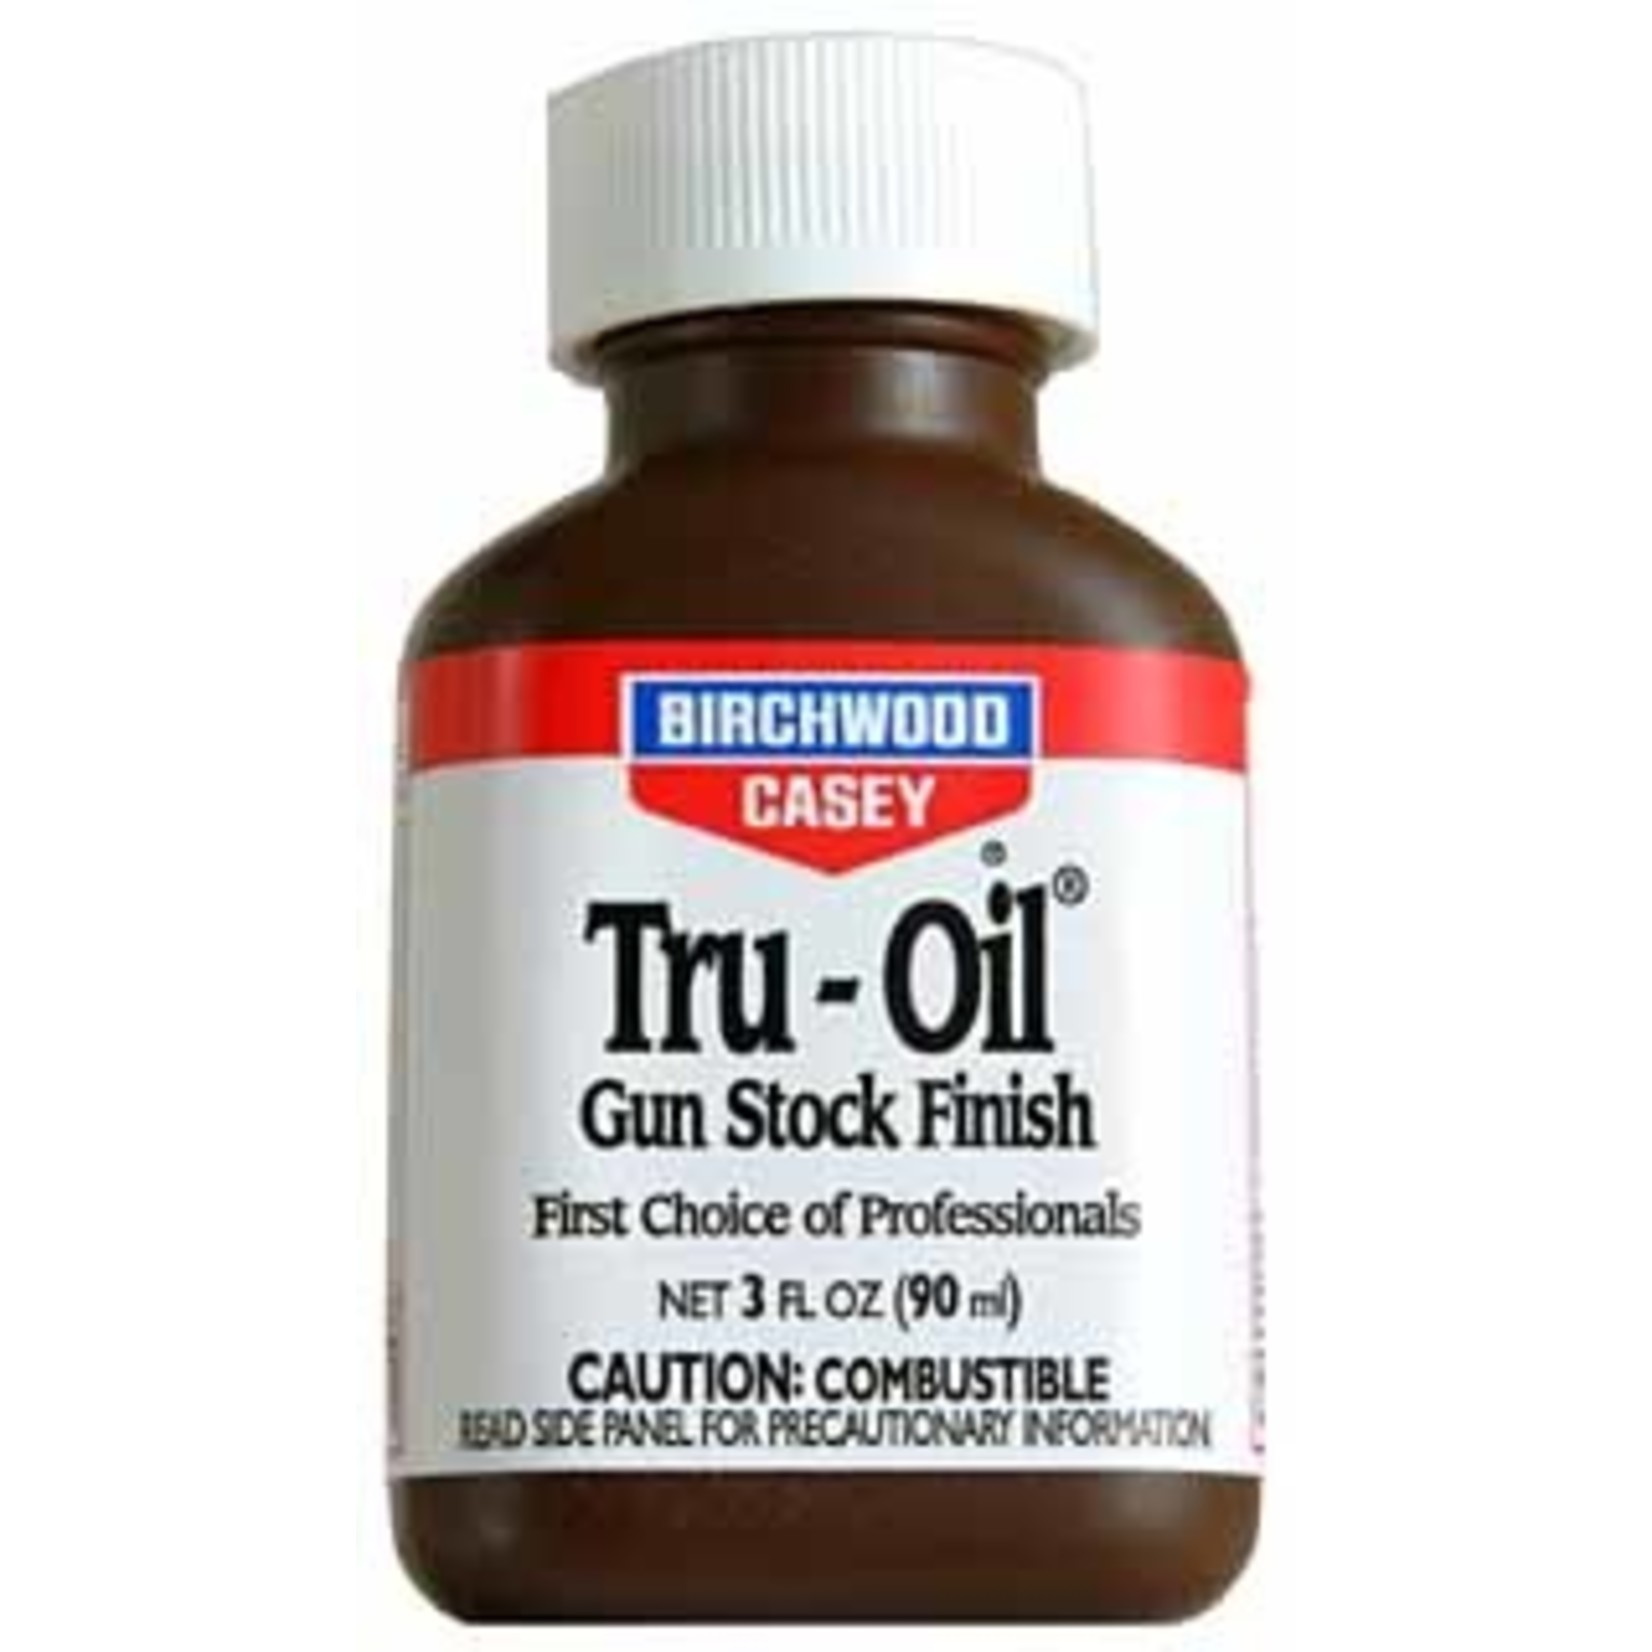 BIRCHWOOD CASEY Huile De Finition Brichwood Casey Tru-Oil 3 Oz